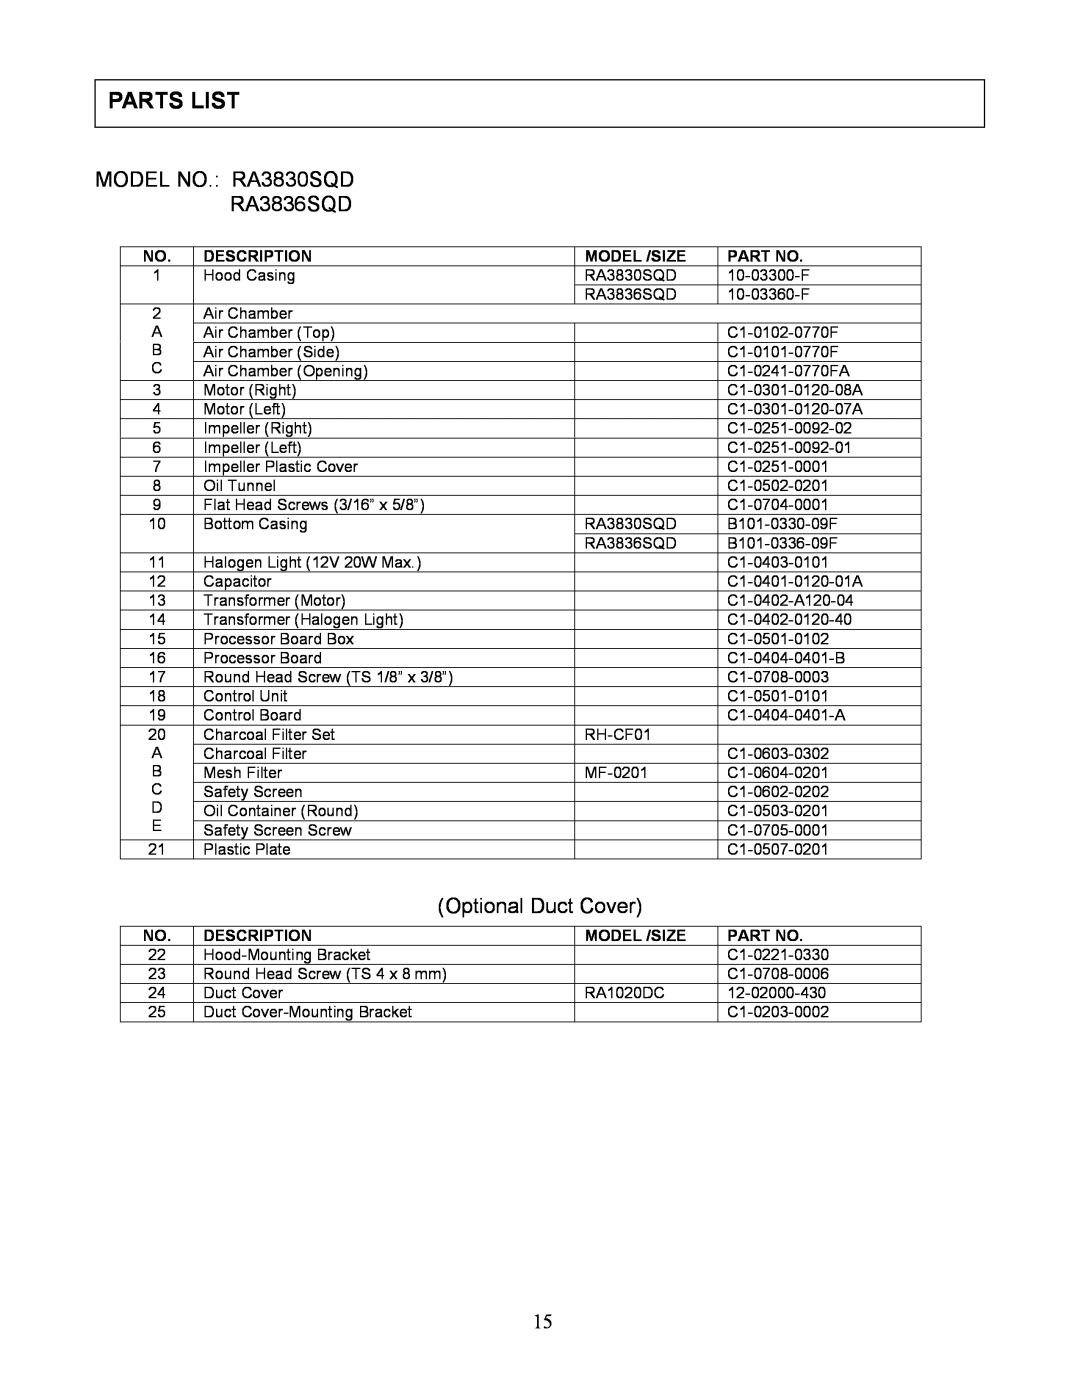 Kobe Range Hoods manual Parts List, MODEL NO. RA3830SQD RA3836SQD, Optional Duct Cover 